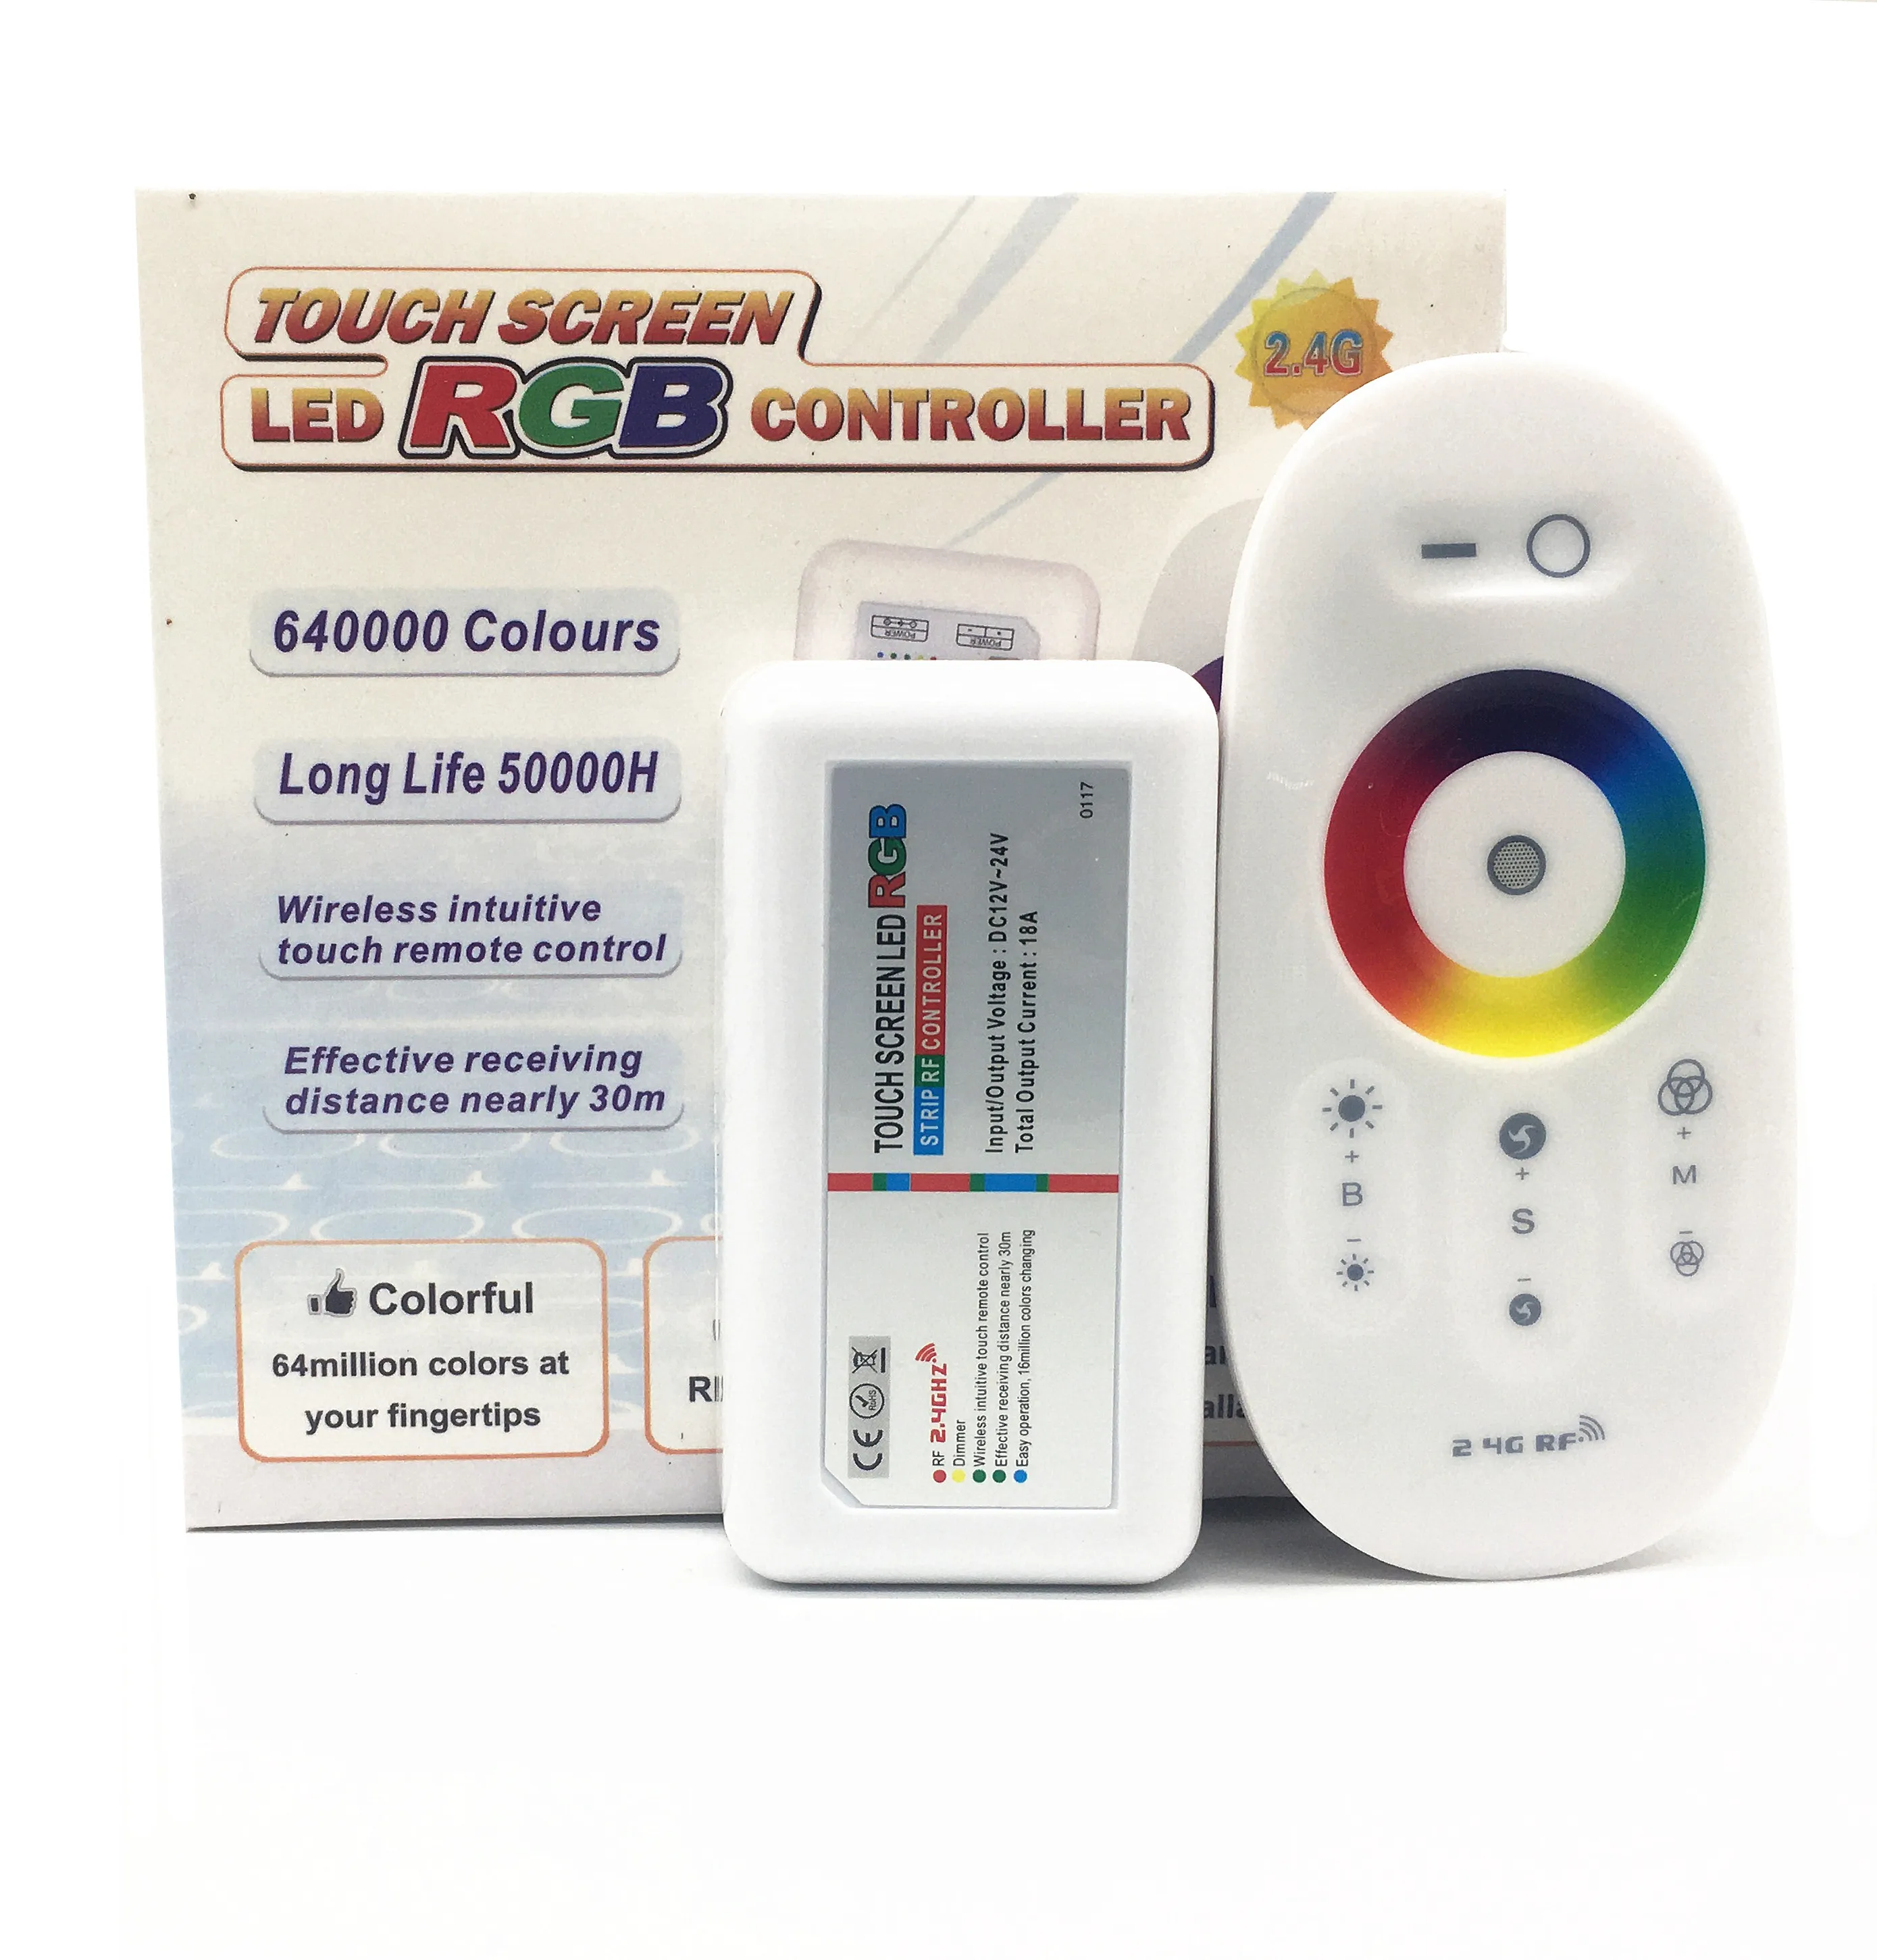 

DC12-24V 6A LED RGBW RGB Controller Touch Screen 2.4G RF Wireless Remote Controller LED Dimmer For 5050 RGB RGBW RGBWW LED Strip